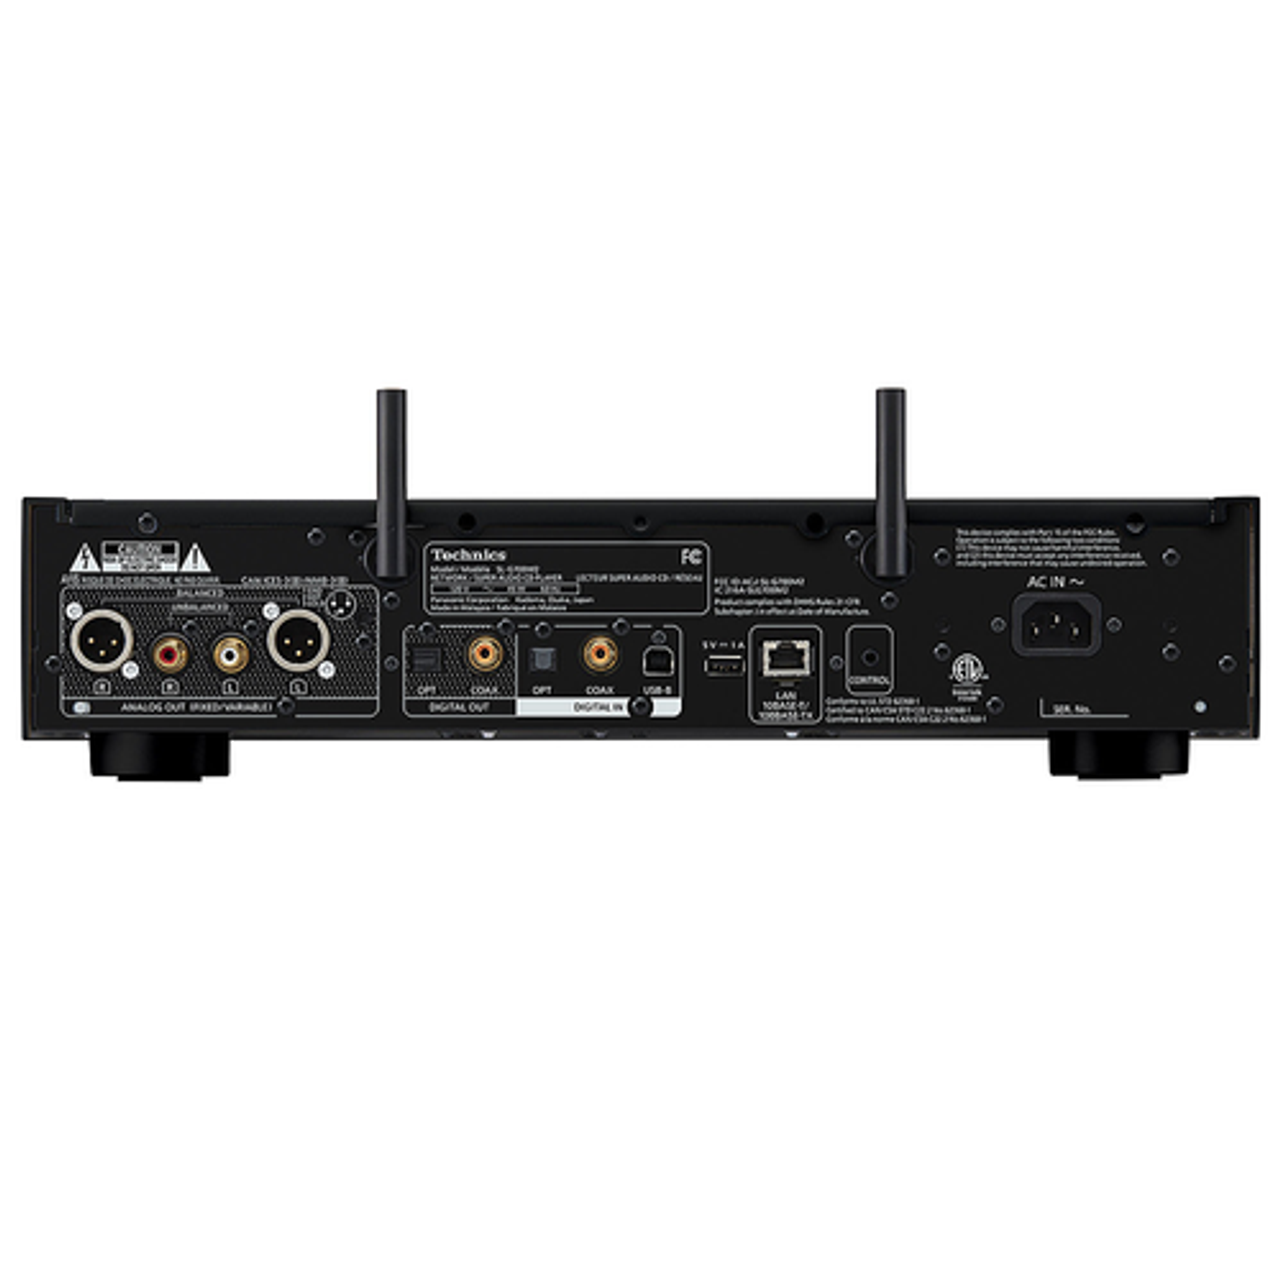 Technics Grand Class SL-G700M2 Network/Super Audio CD Player - Black